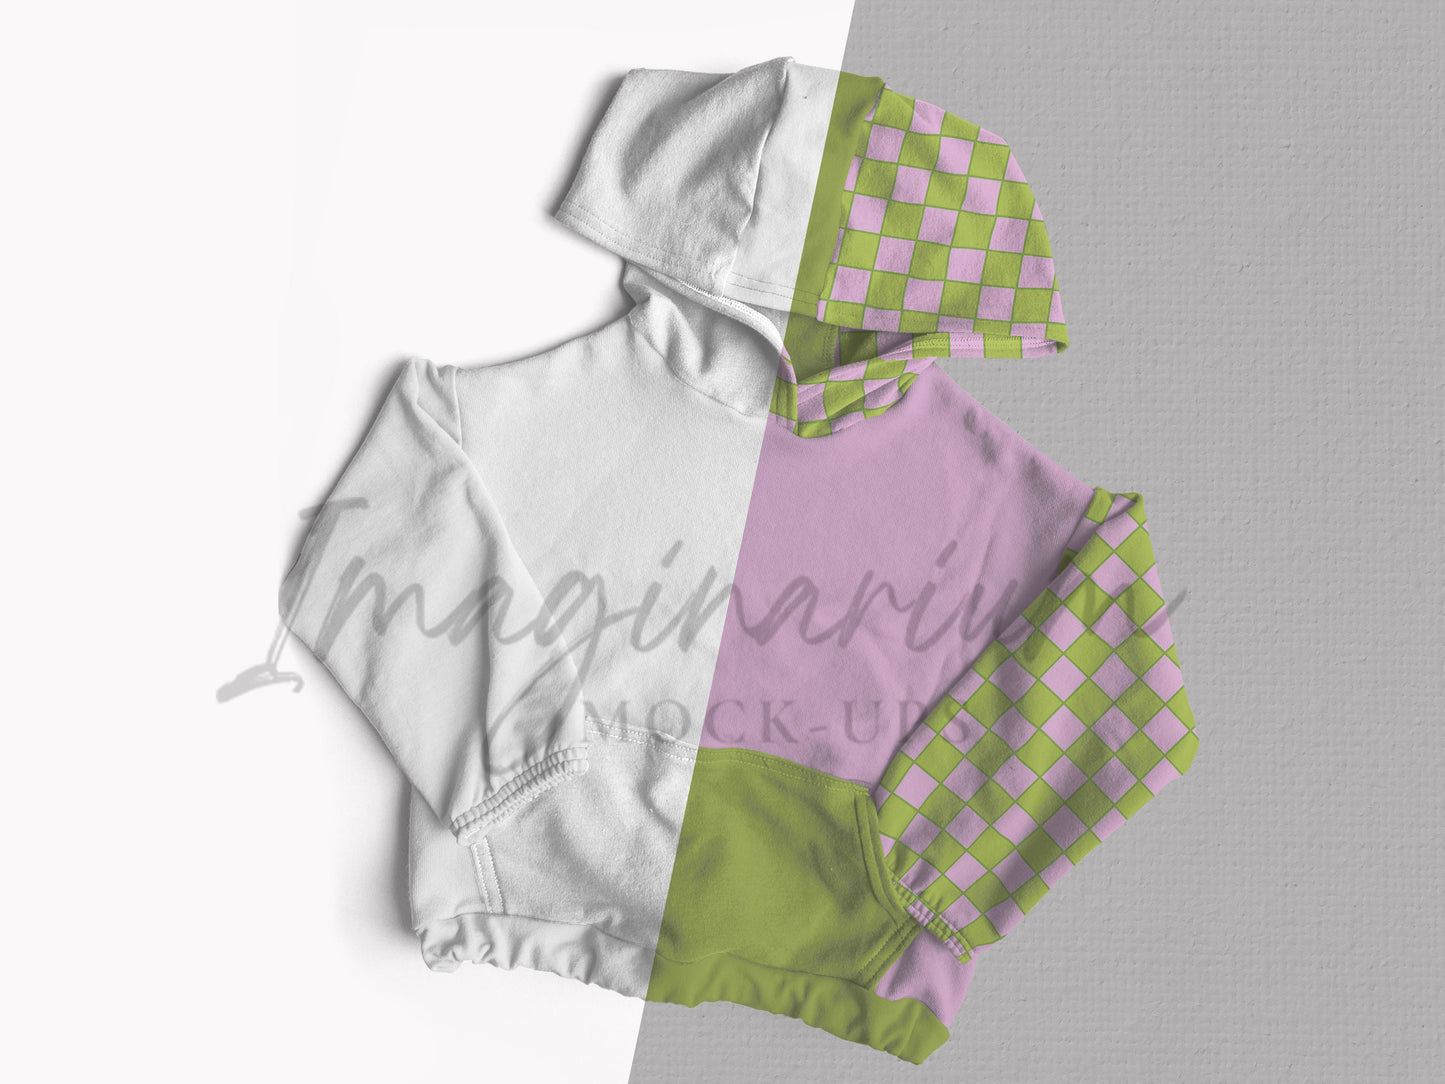 Retro Hoodie Hooded Sweatshirt Mock Up, Realistic Mockup for Photoshop and Procreate